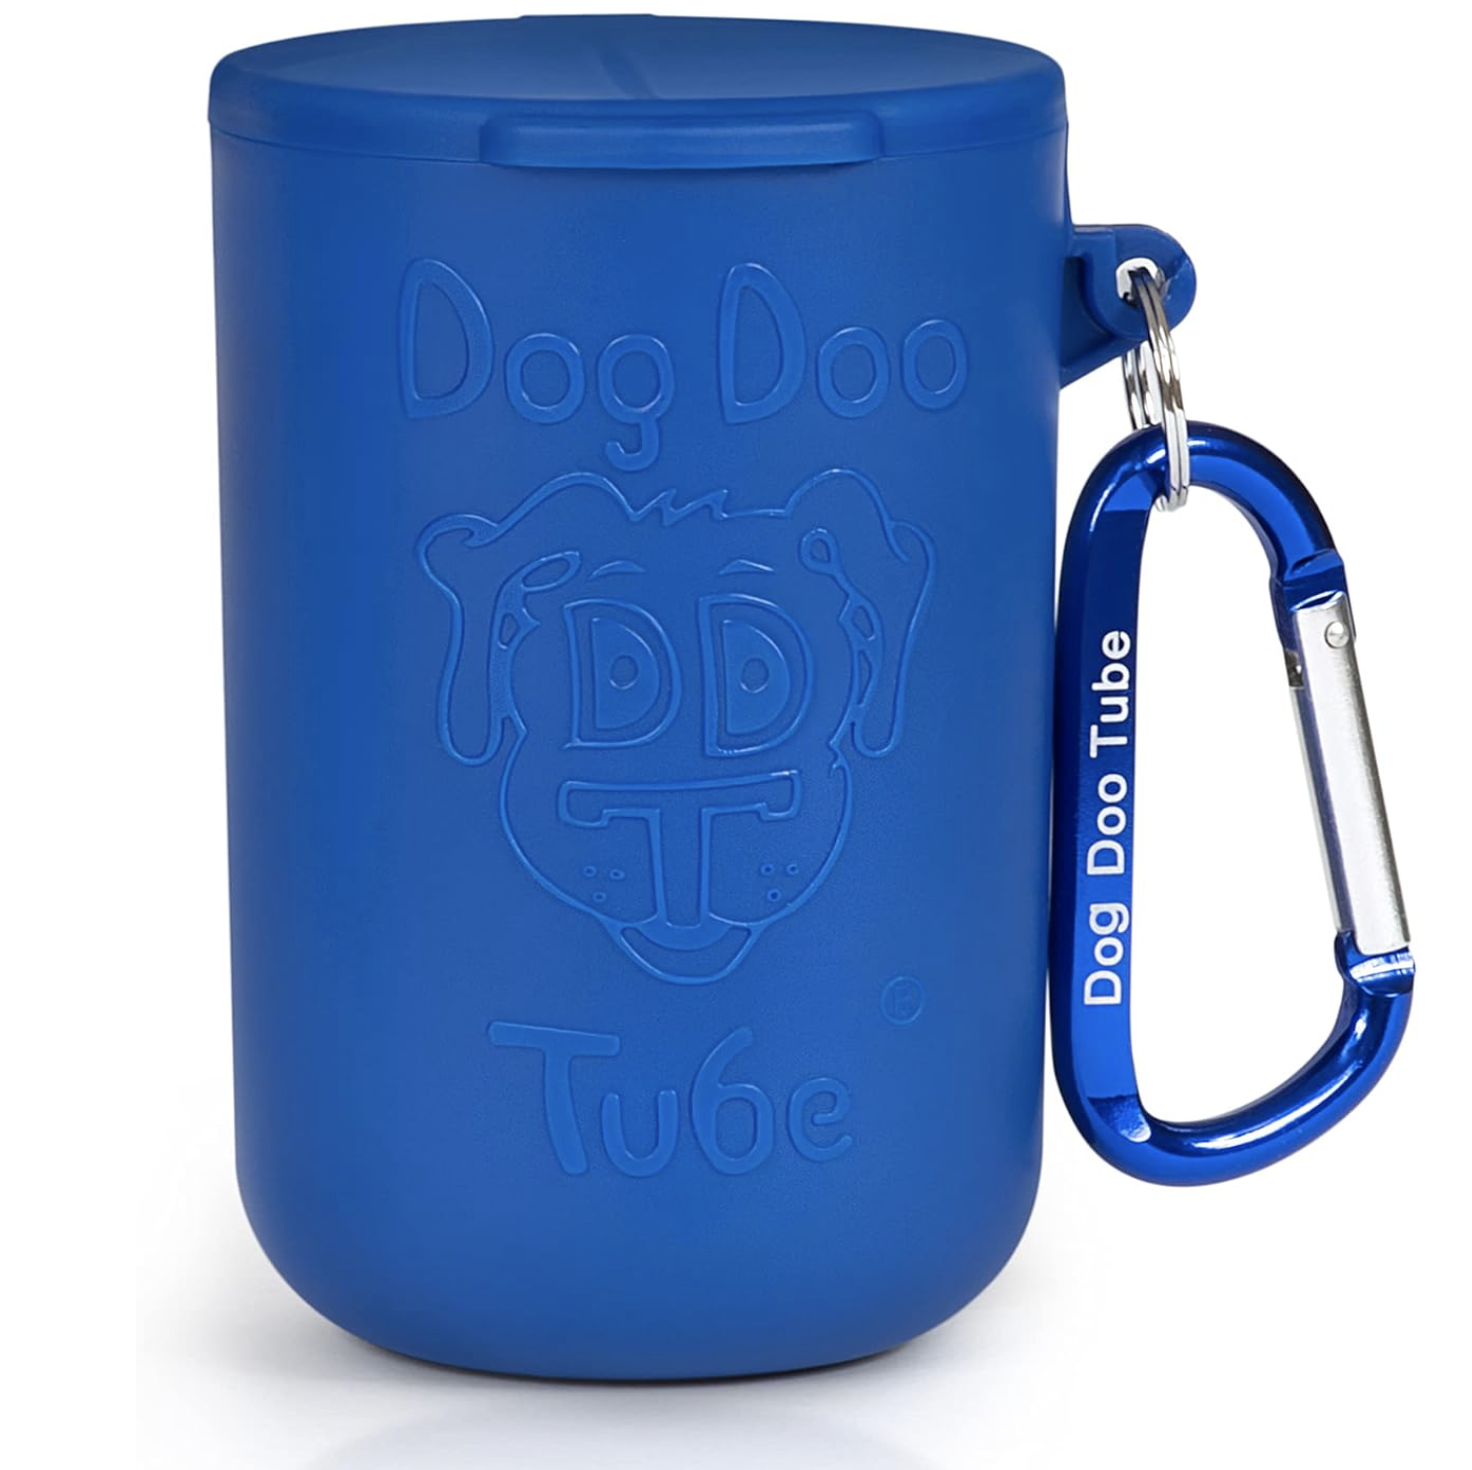 portable dog doo used waste bag holder with carabiner